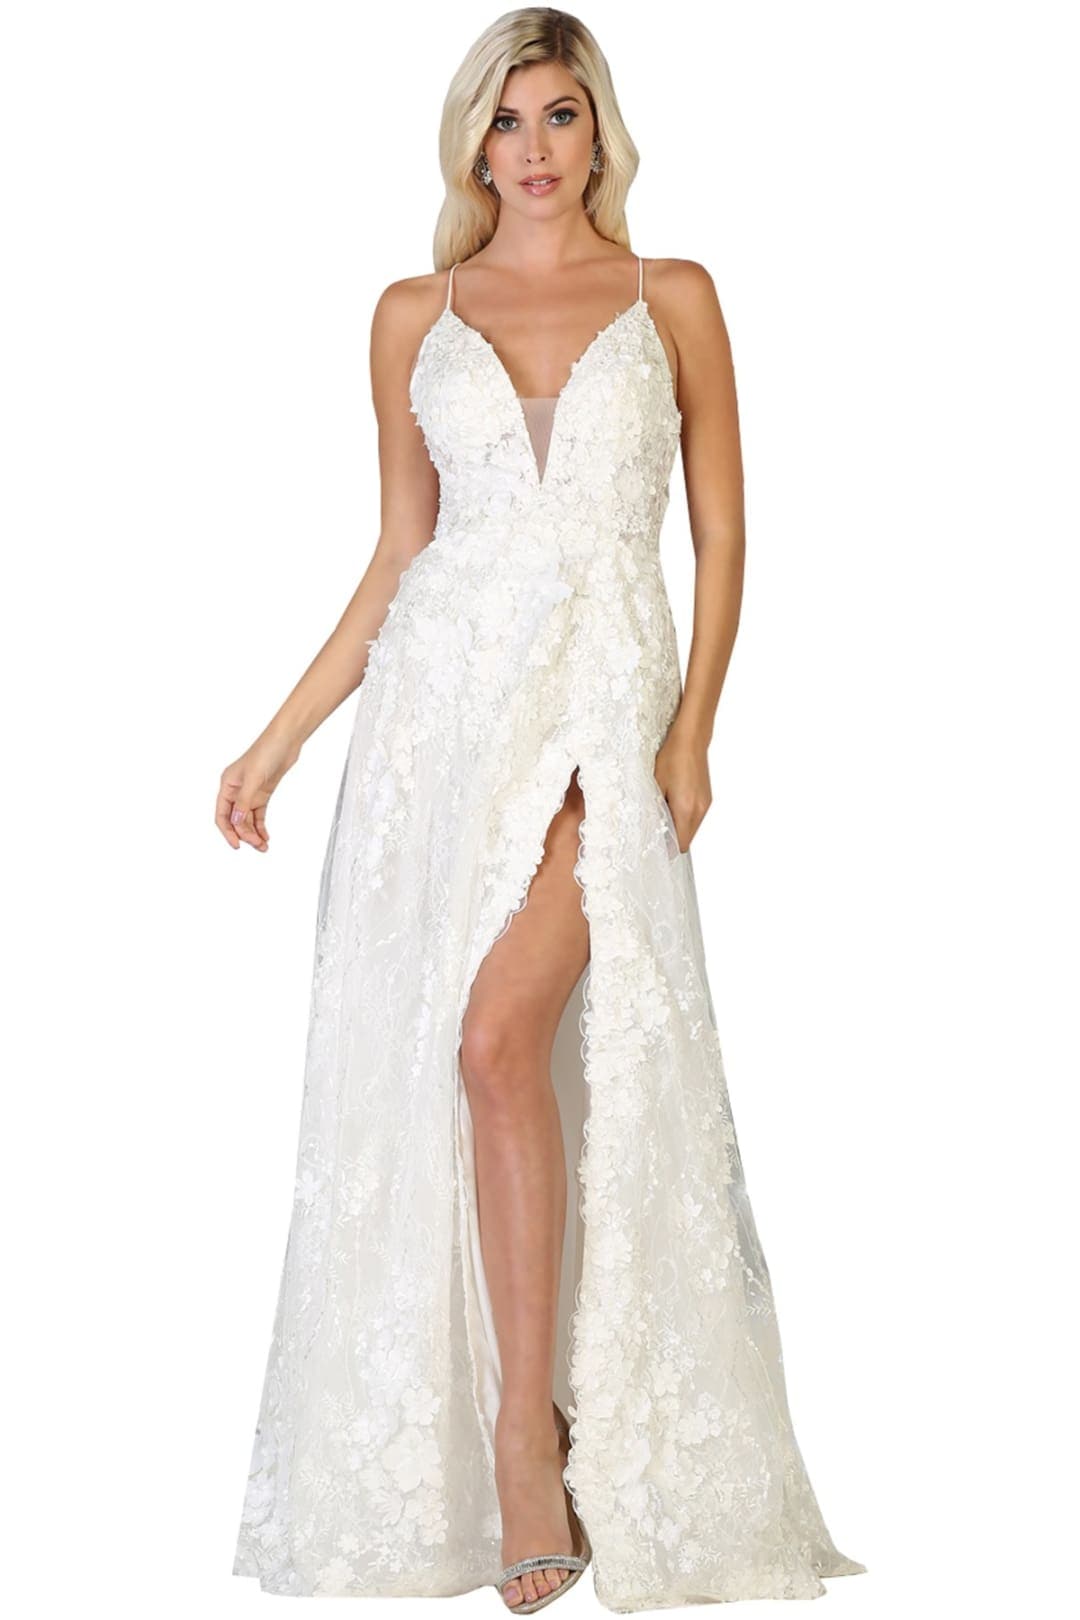 Thigh High Slit Prom Dress - WHITE / 2